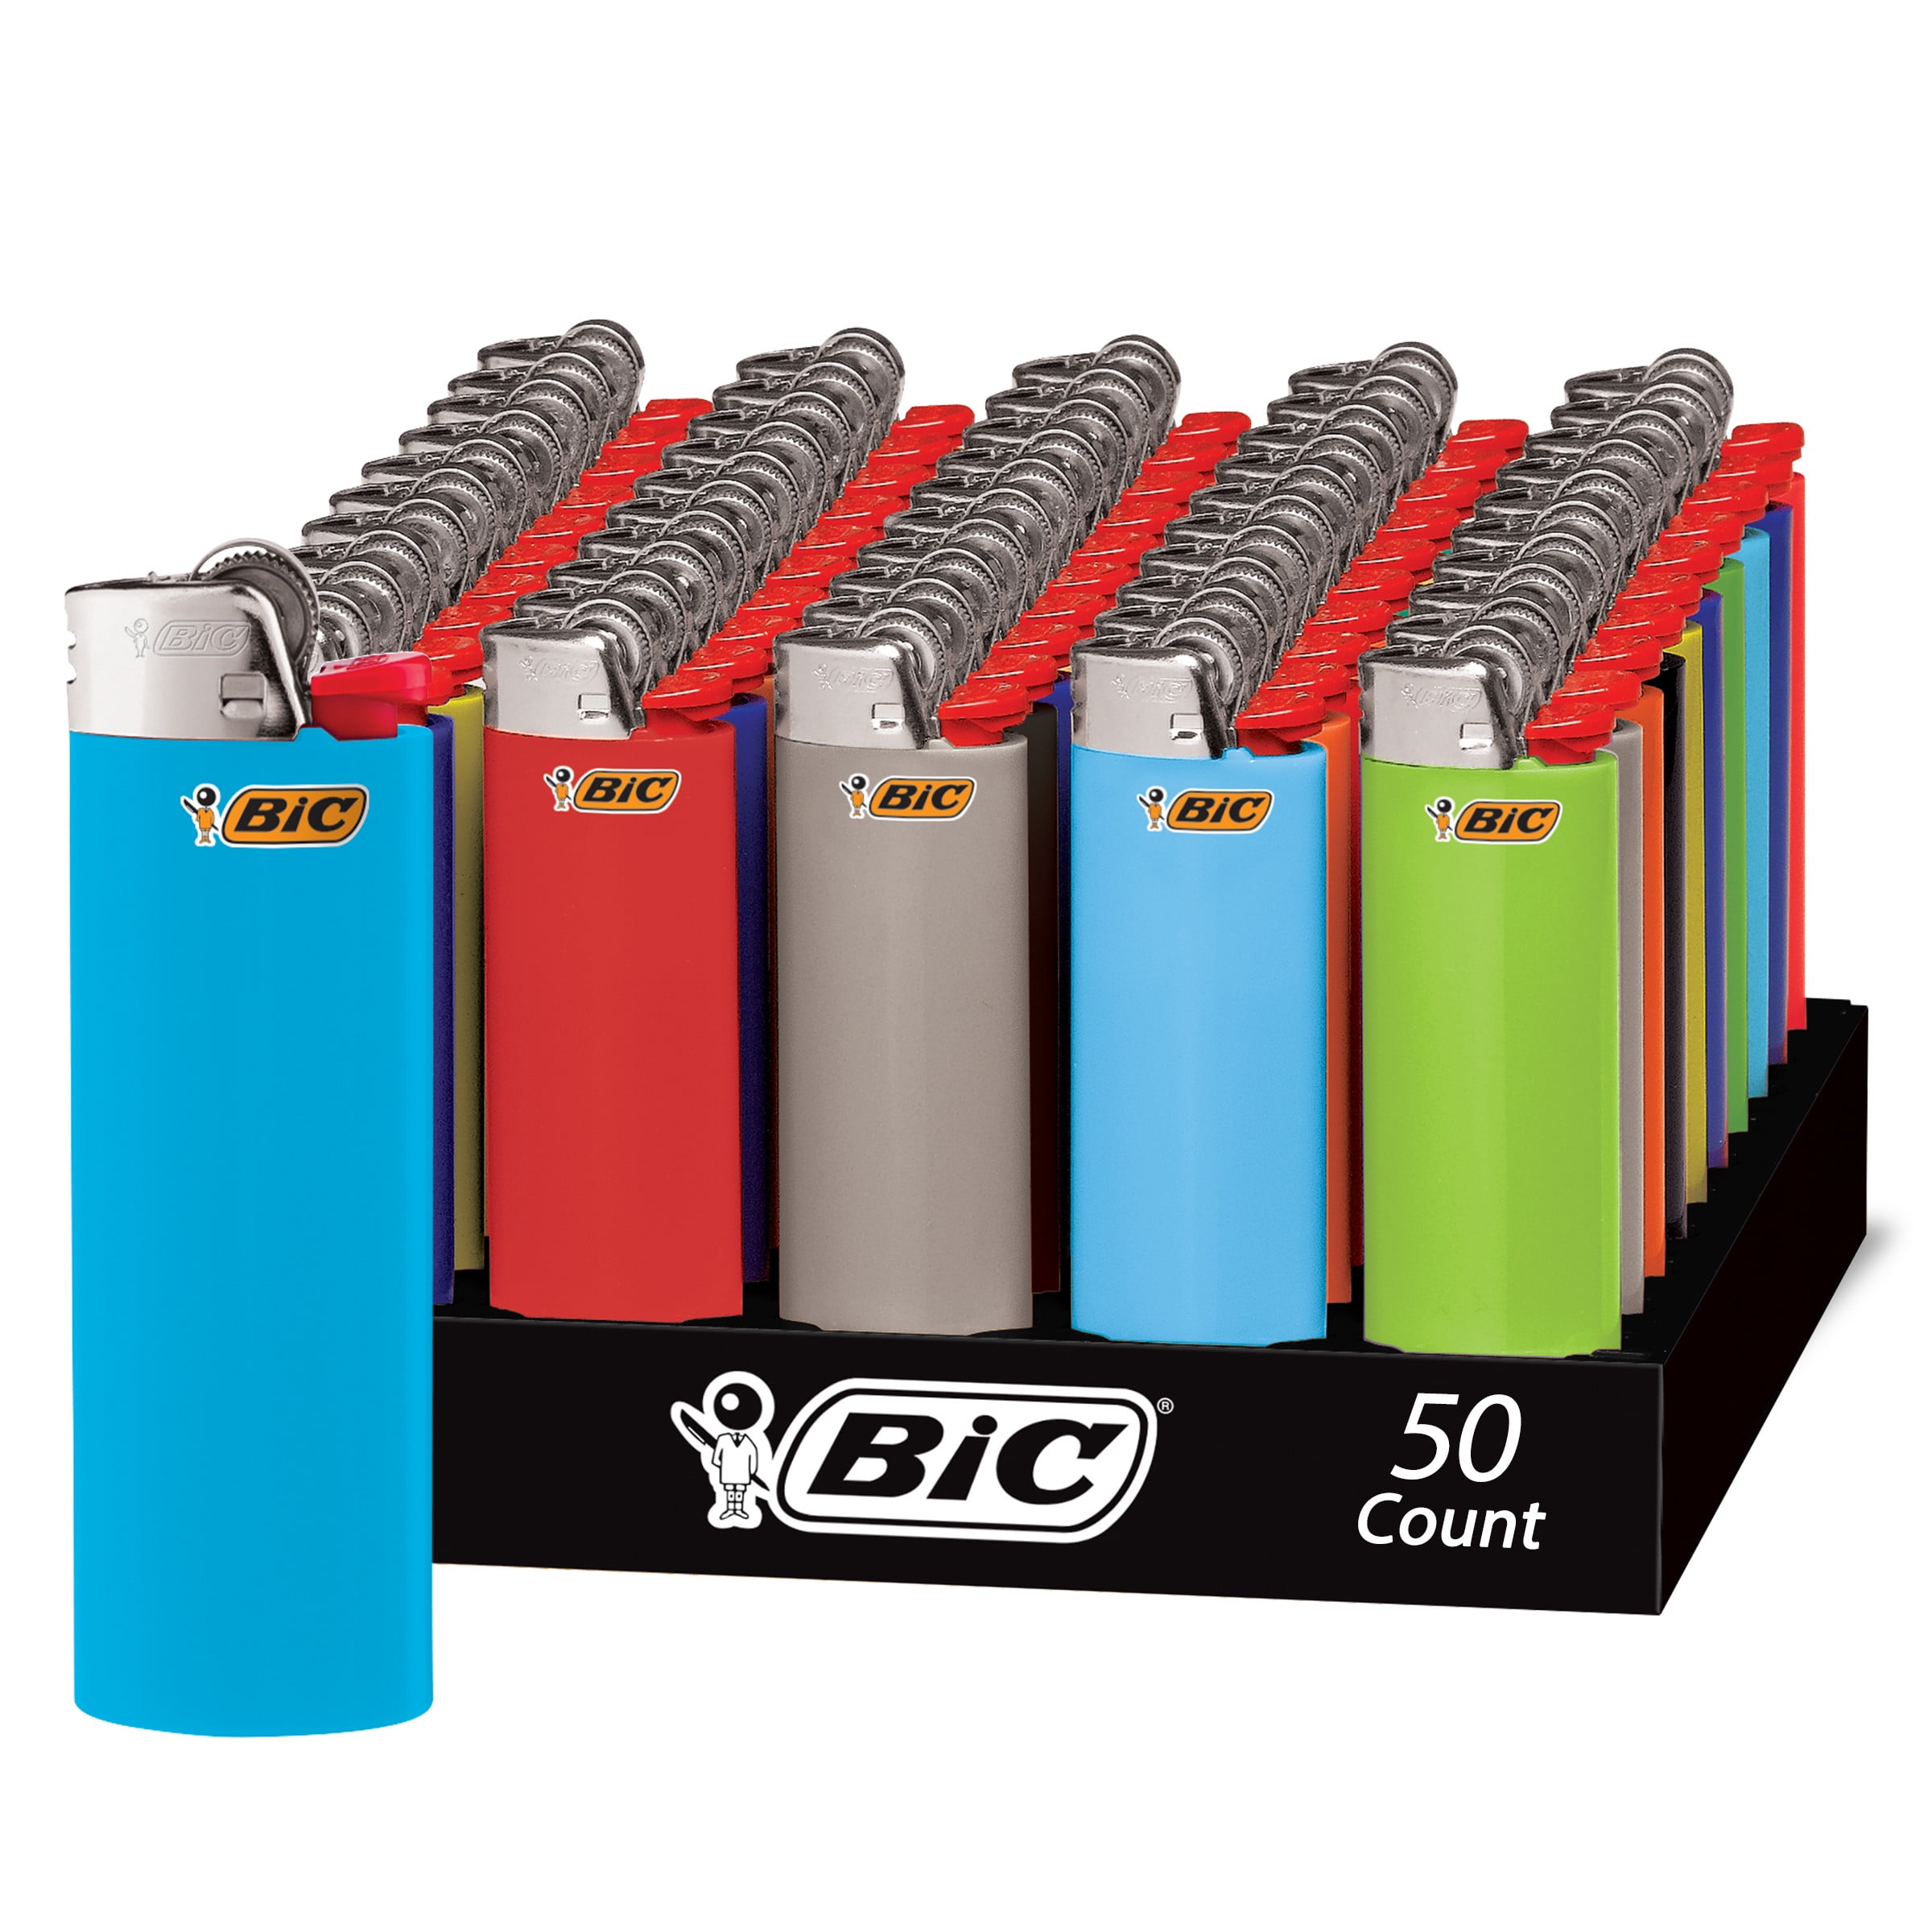 moral knap Pløje BIC Maxi Pocket Lighter, Classic Collection, Assorted Dark Blue, Red, Gray,  Light Blue, Pink, Black and Purple Unique Lighter Colors, 50 Count Tray of  Lighters - Walmart.com